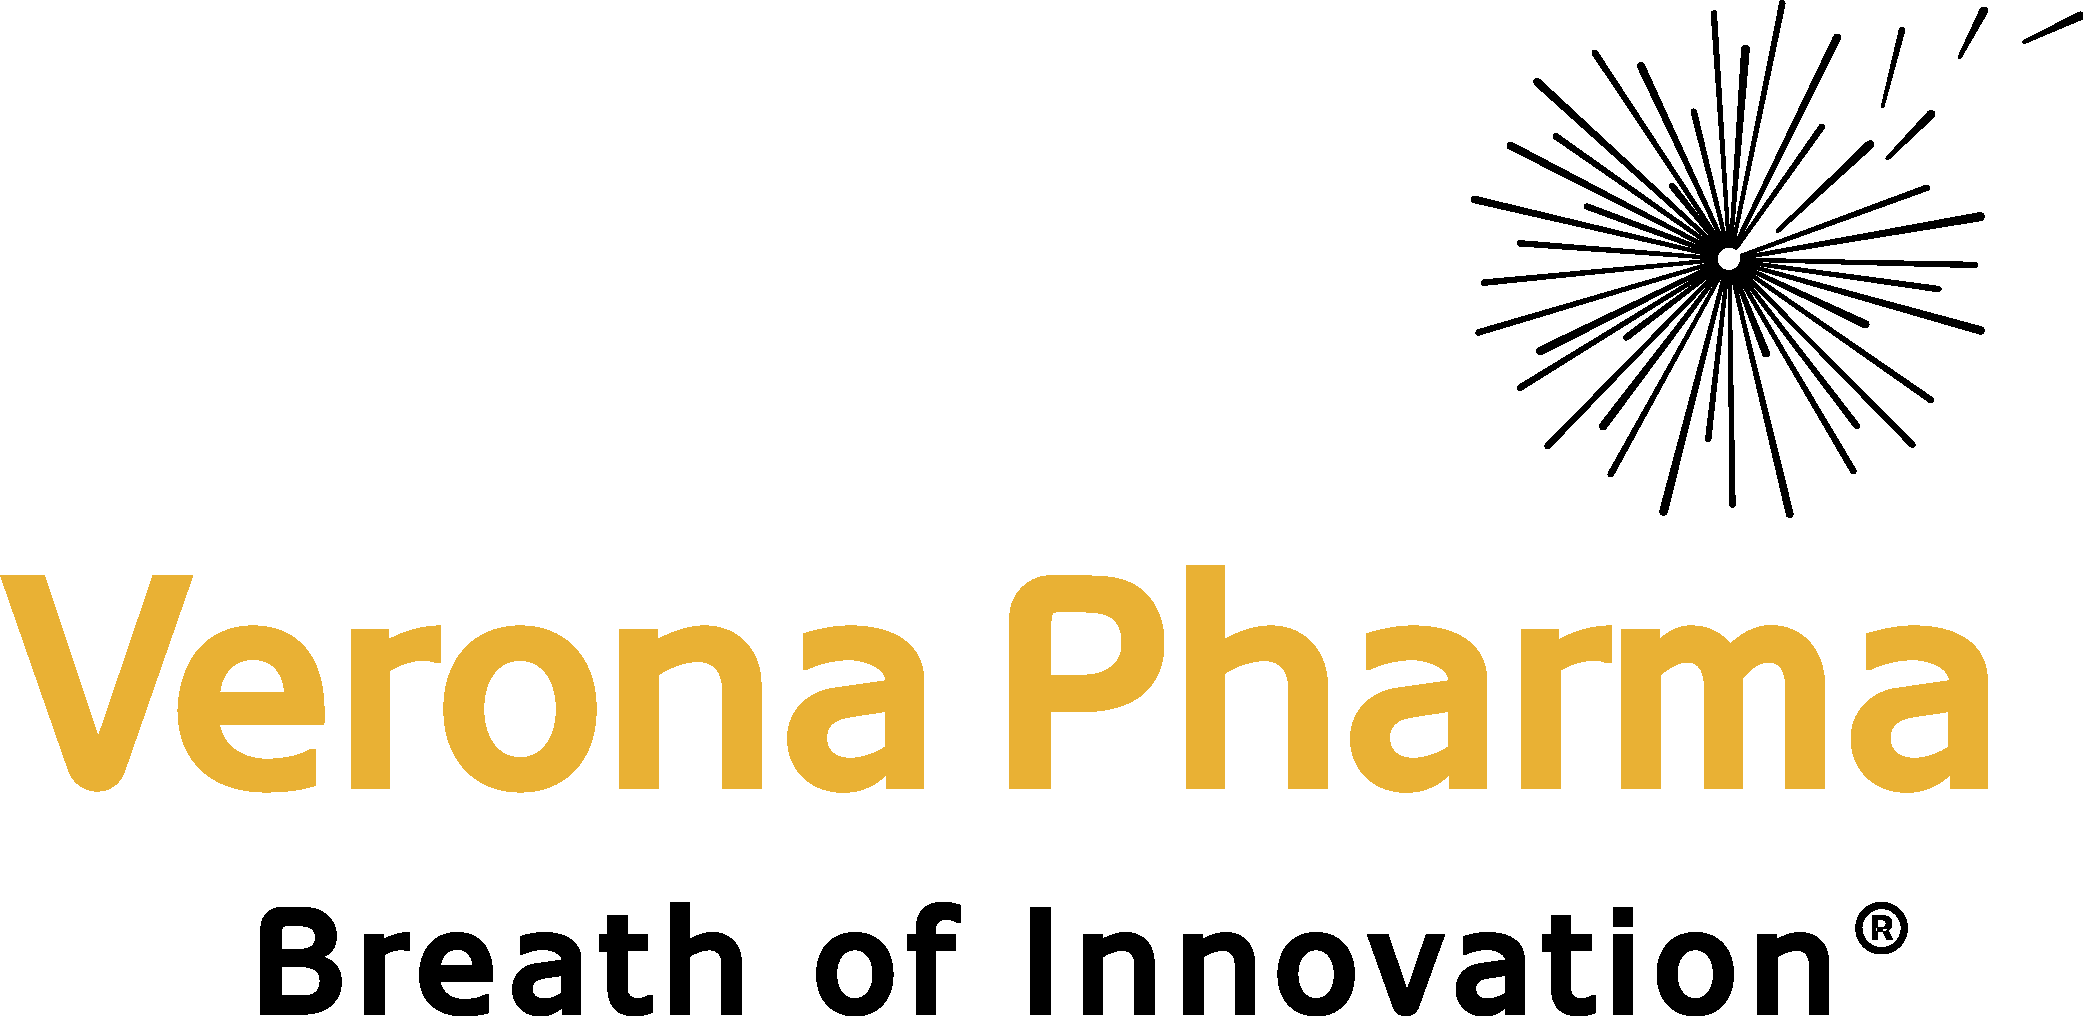 Verona Pharma Logo Vector